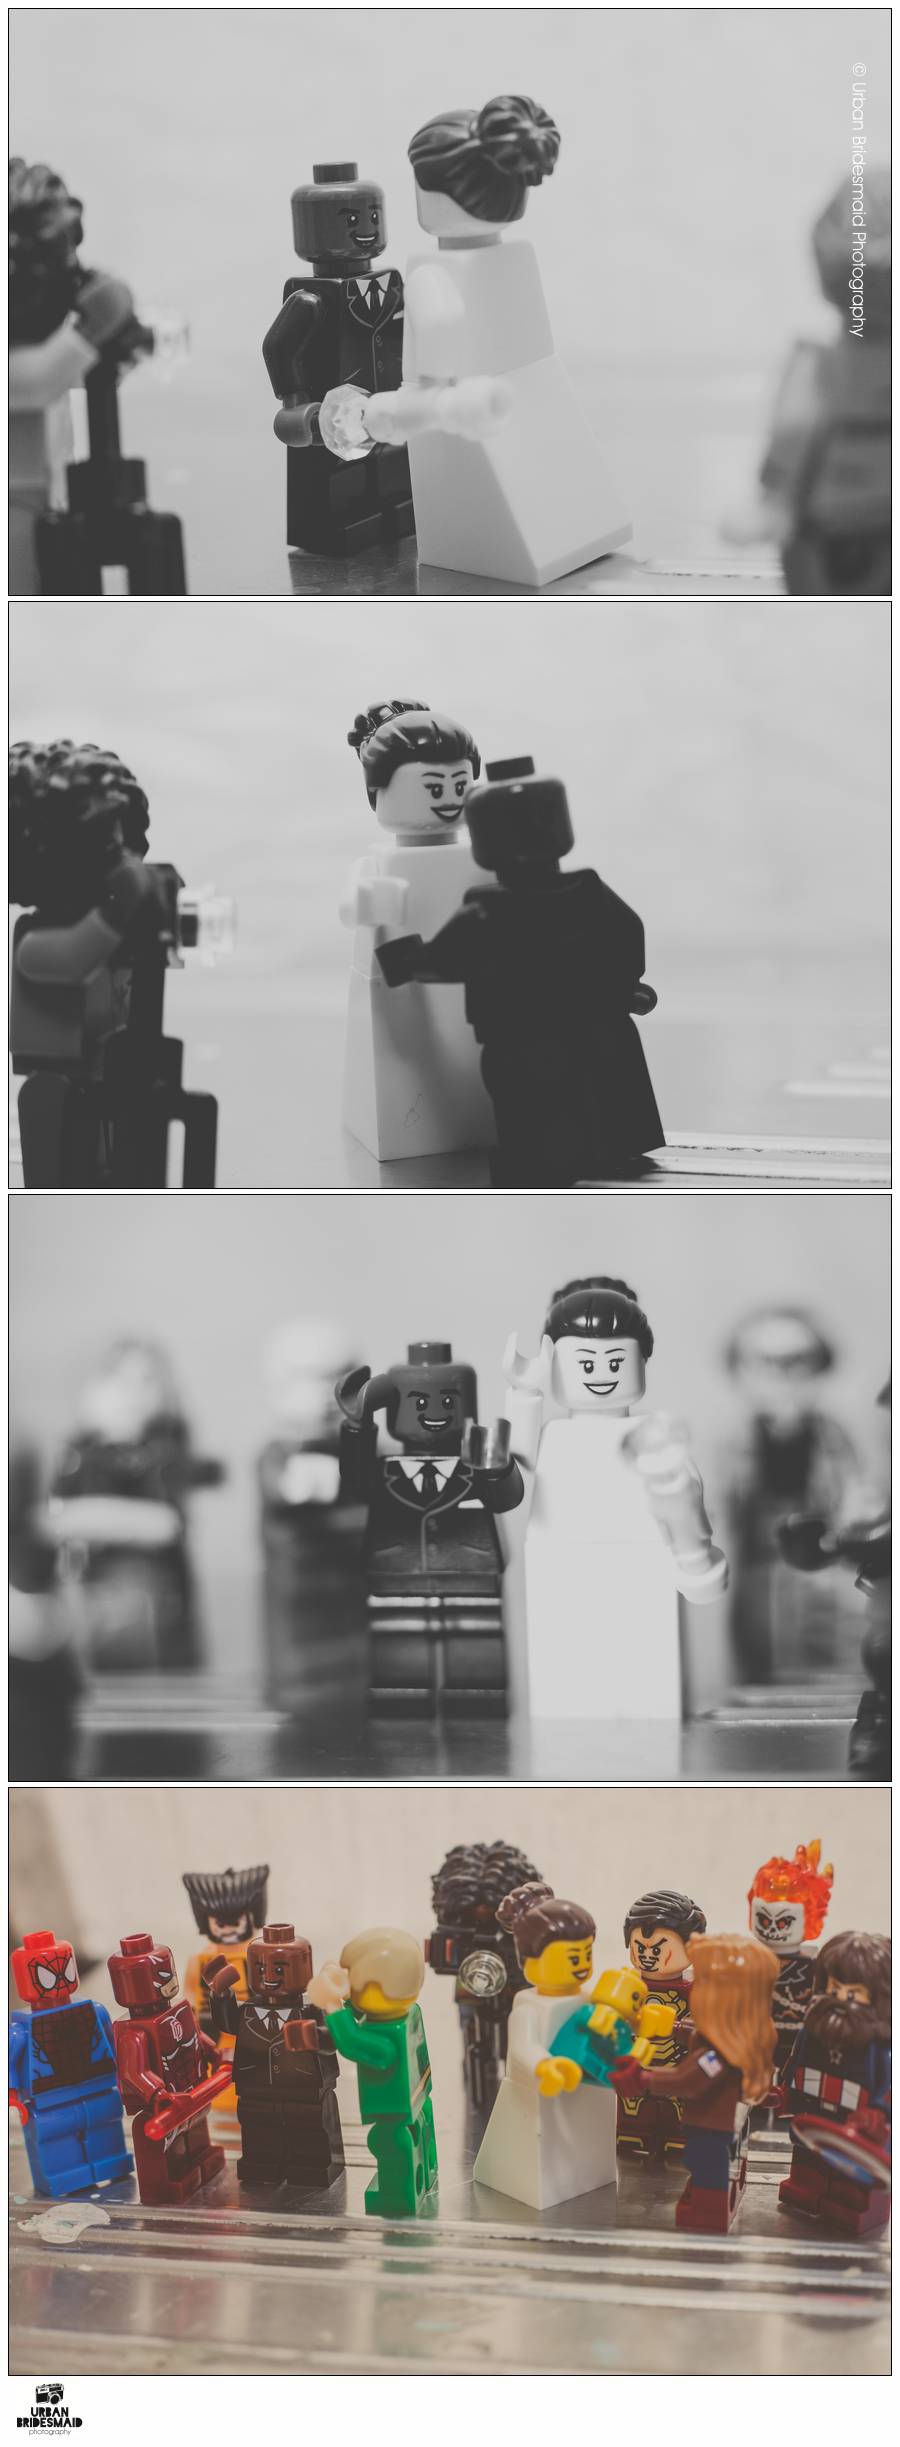 09-Lego-Minifig-Jessica-Jones-Luke-Cage-wedding-London-Urban-Bridesmaid-Photography Superhero Destination Wedding with Lego figures and minifigs